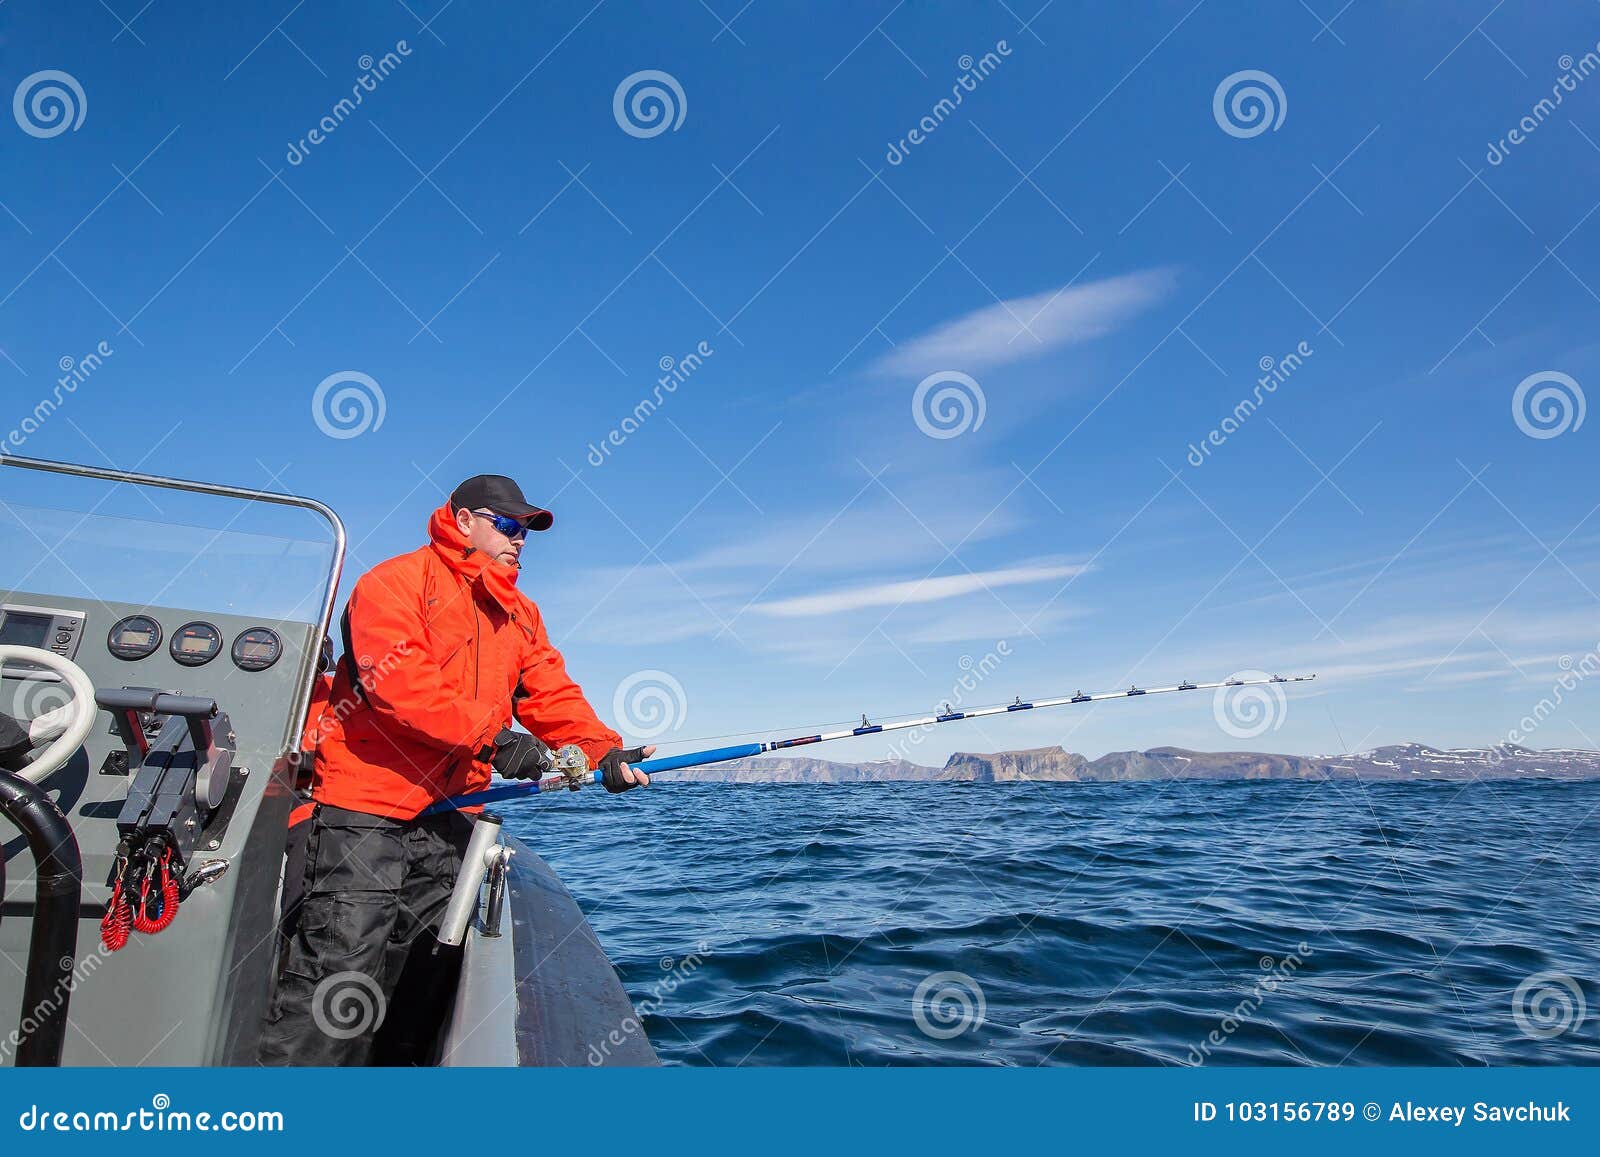 https://thumbs.dreamstime.com/z/man-fishing-boat-fishing-rod-red-jacket-sky-sea-man-fishing-boat-fishing-rod-red-jacket-103156789.jpg